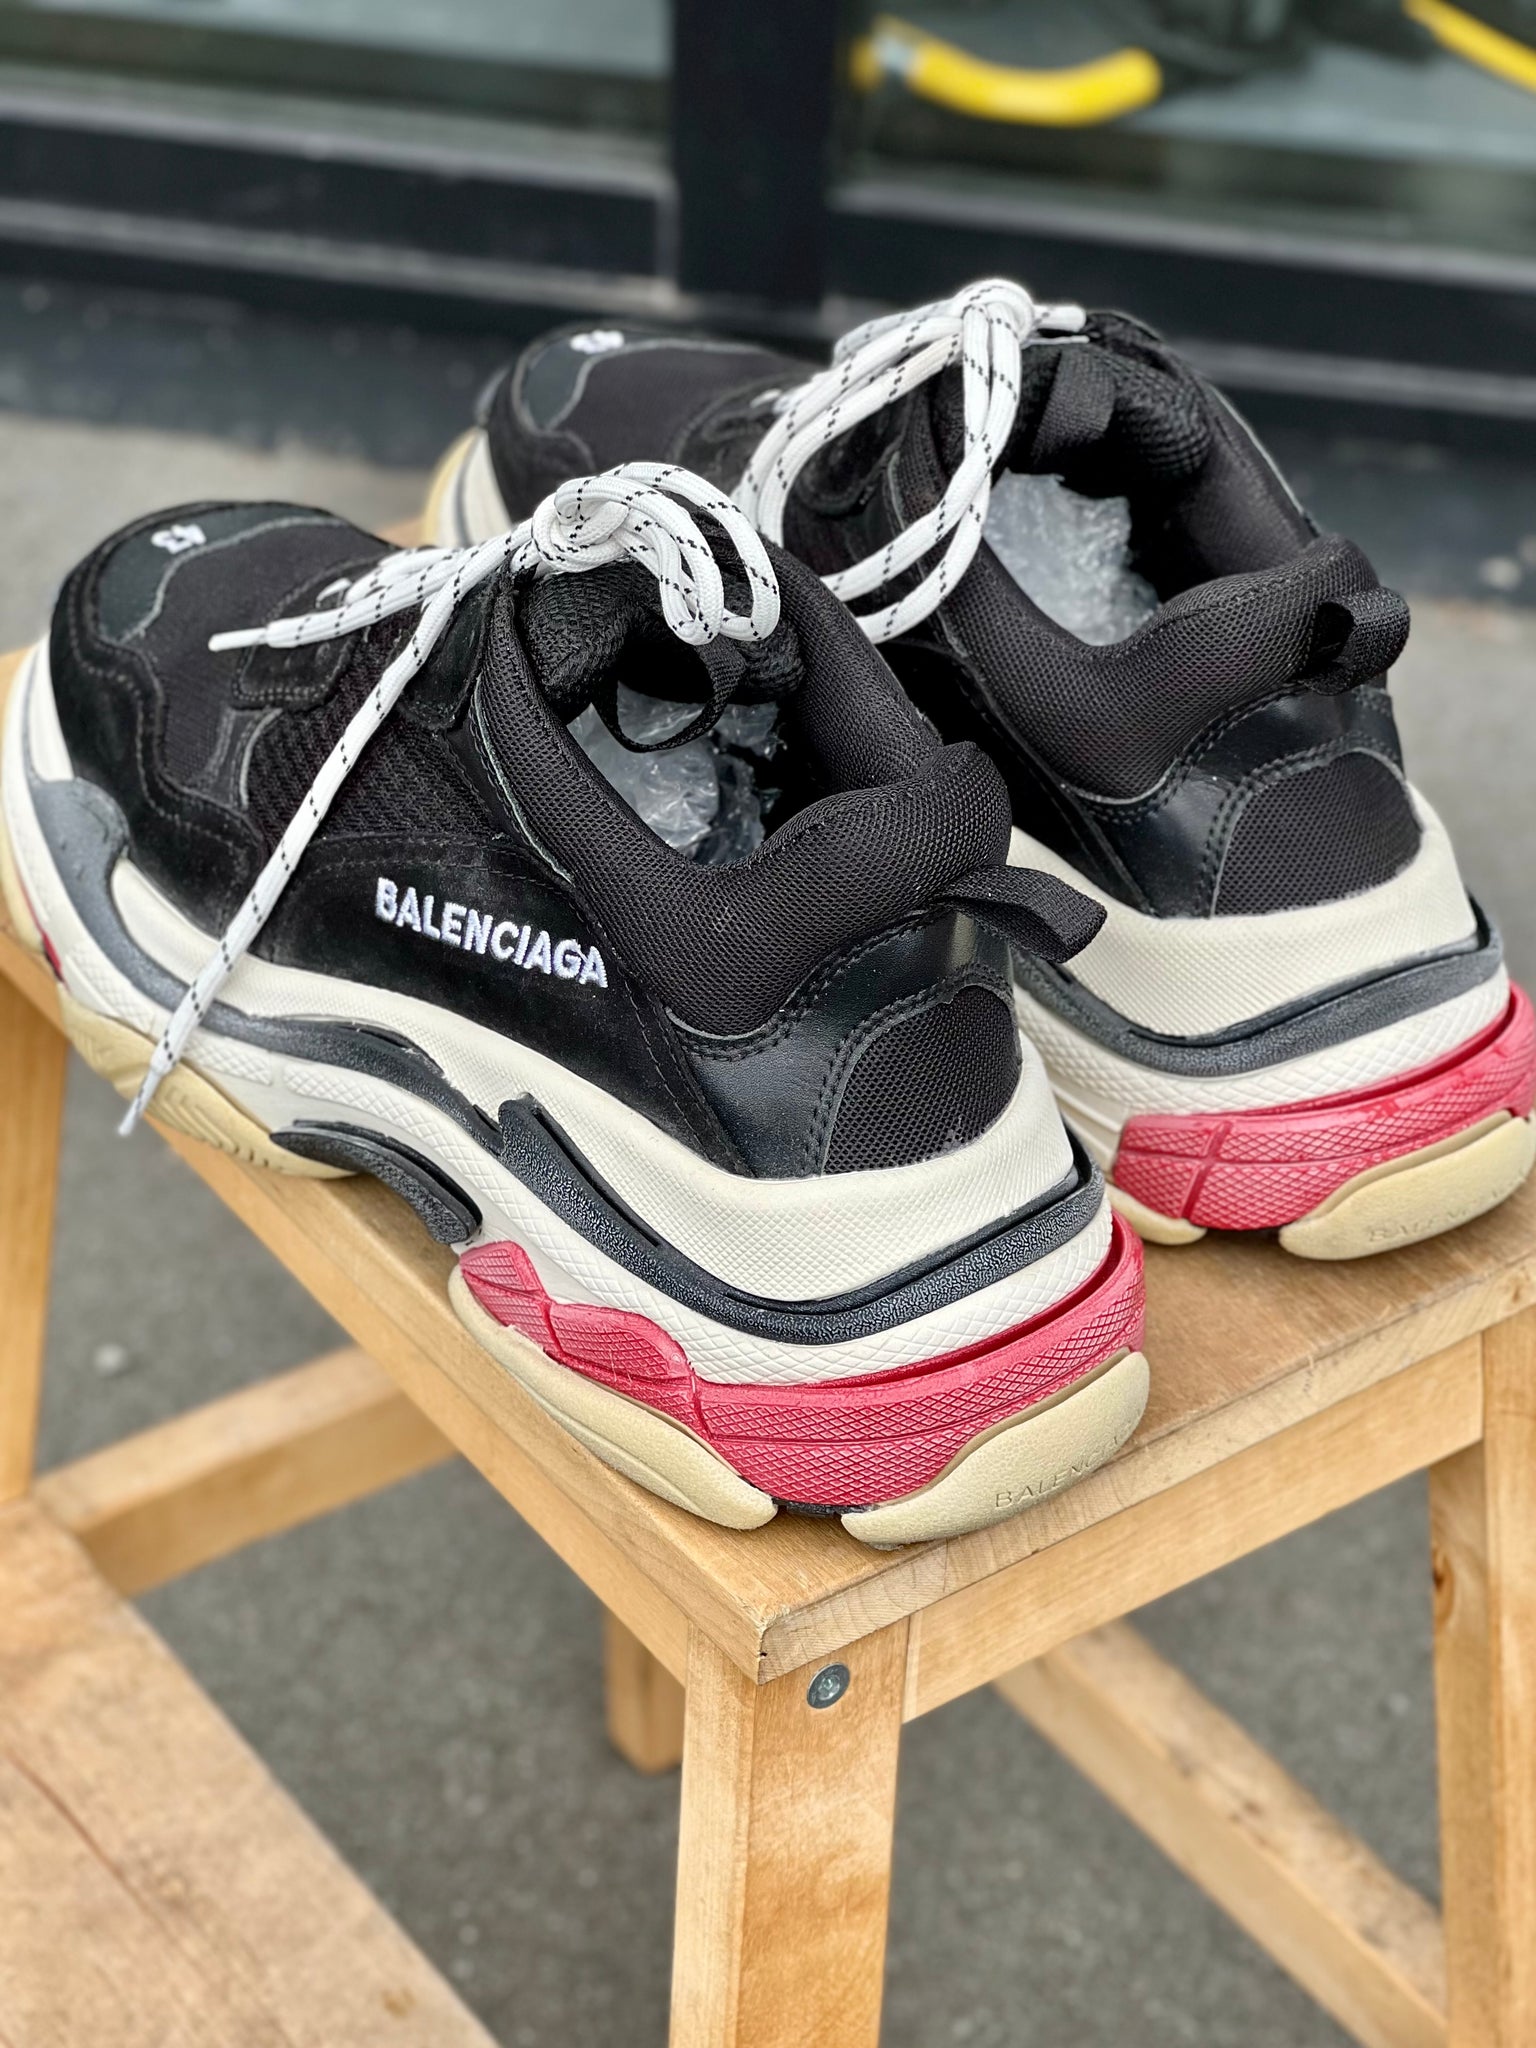 Balenciaga Track Sneakers in White Size 35 | eBay